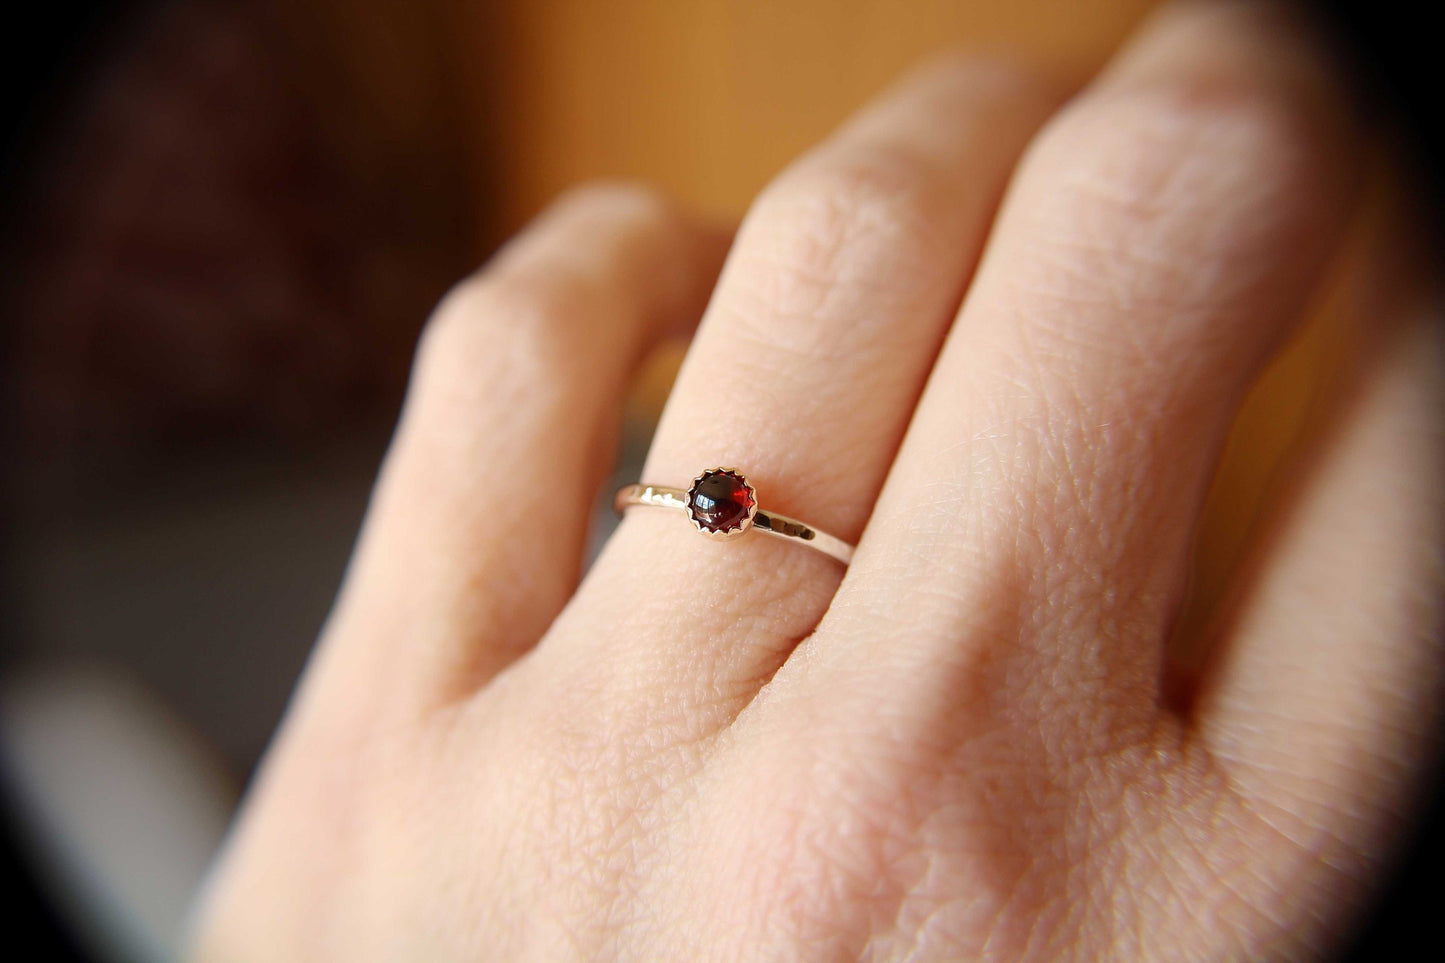 Garnet Ring, Natural Red Garnet Ring, Textured Garnet Ring, Handmade Ring, Thick Ring, Silver and Gold Ring, Gemstone Ring, January, Gift